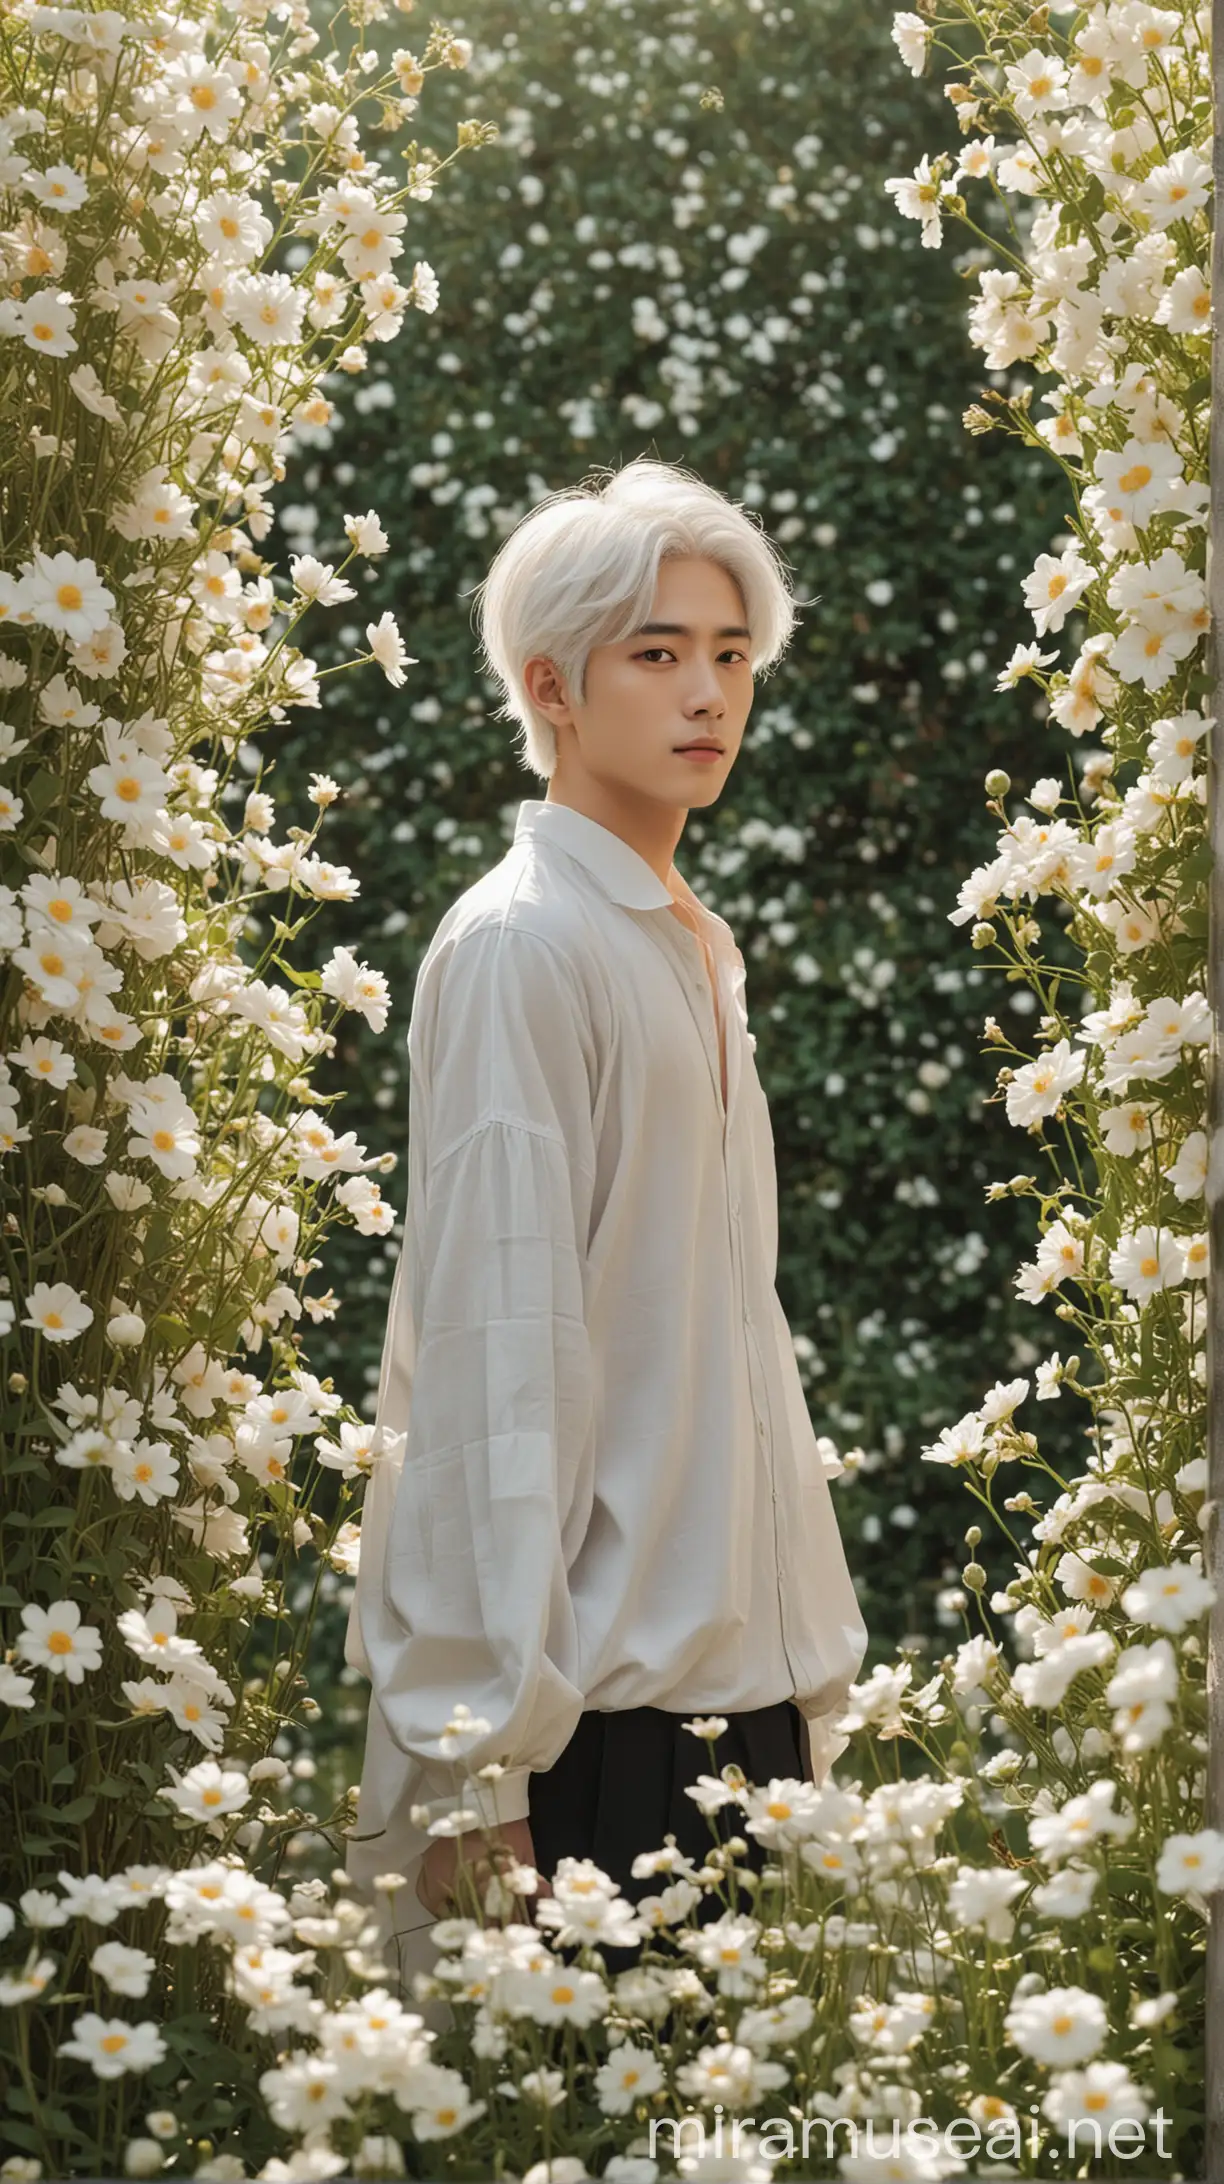 Elegant Figure with White Hair Amidst Floral Splendor